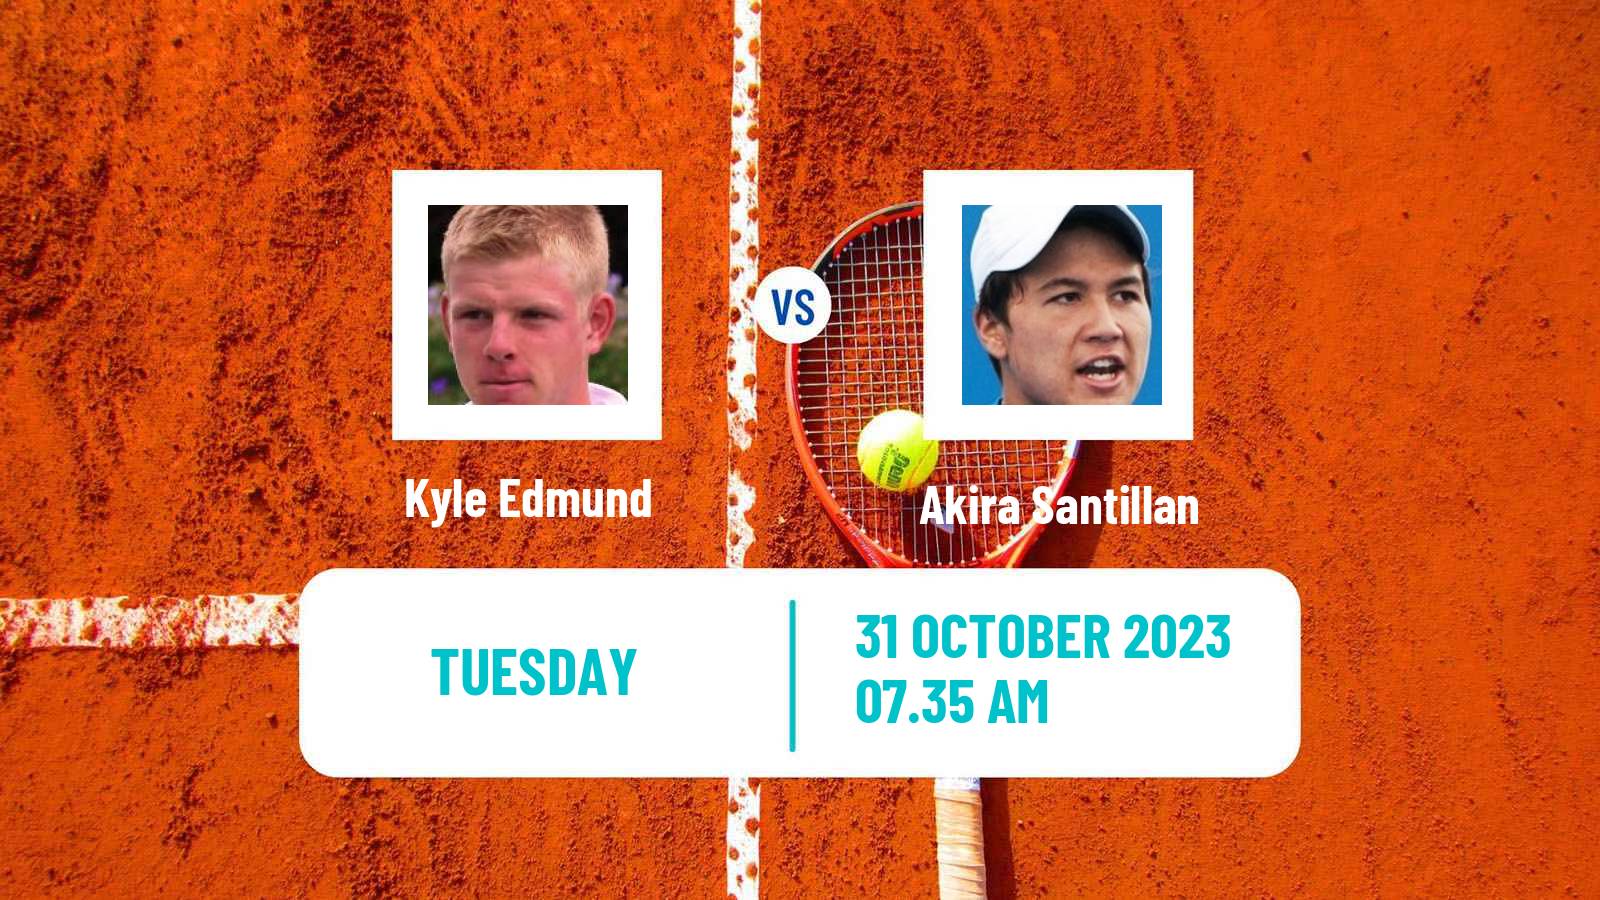 Tennis ITF M25 Sunderland 2 Men Kyle Edmund - Akira Santillan